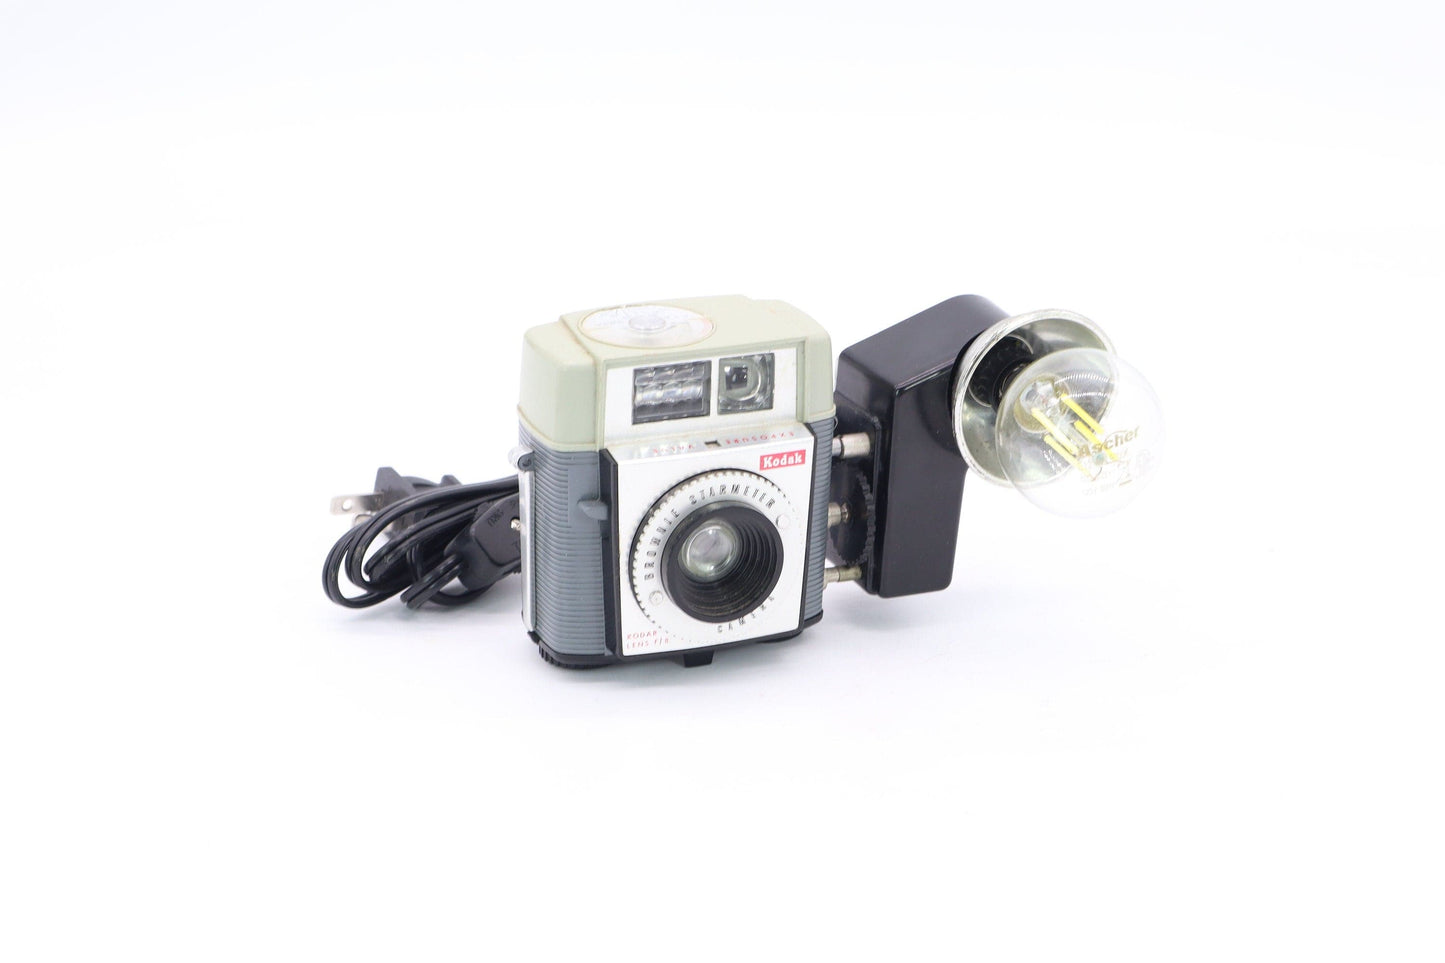 LightAndTimeArt Camera Lamp Small Accent Lamp - Vintage Kodak Brownie Starmeter / Starmatic Cameras